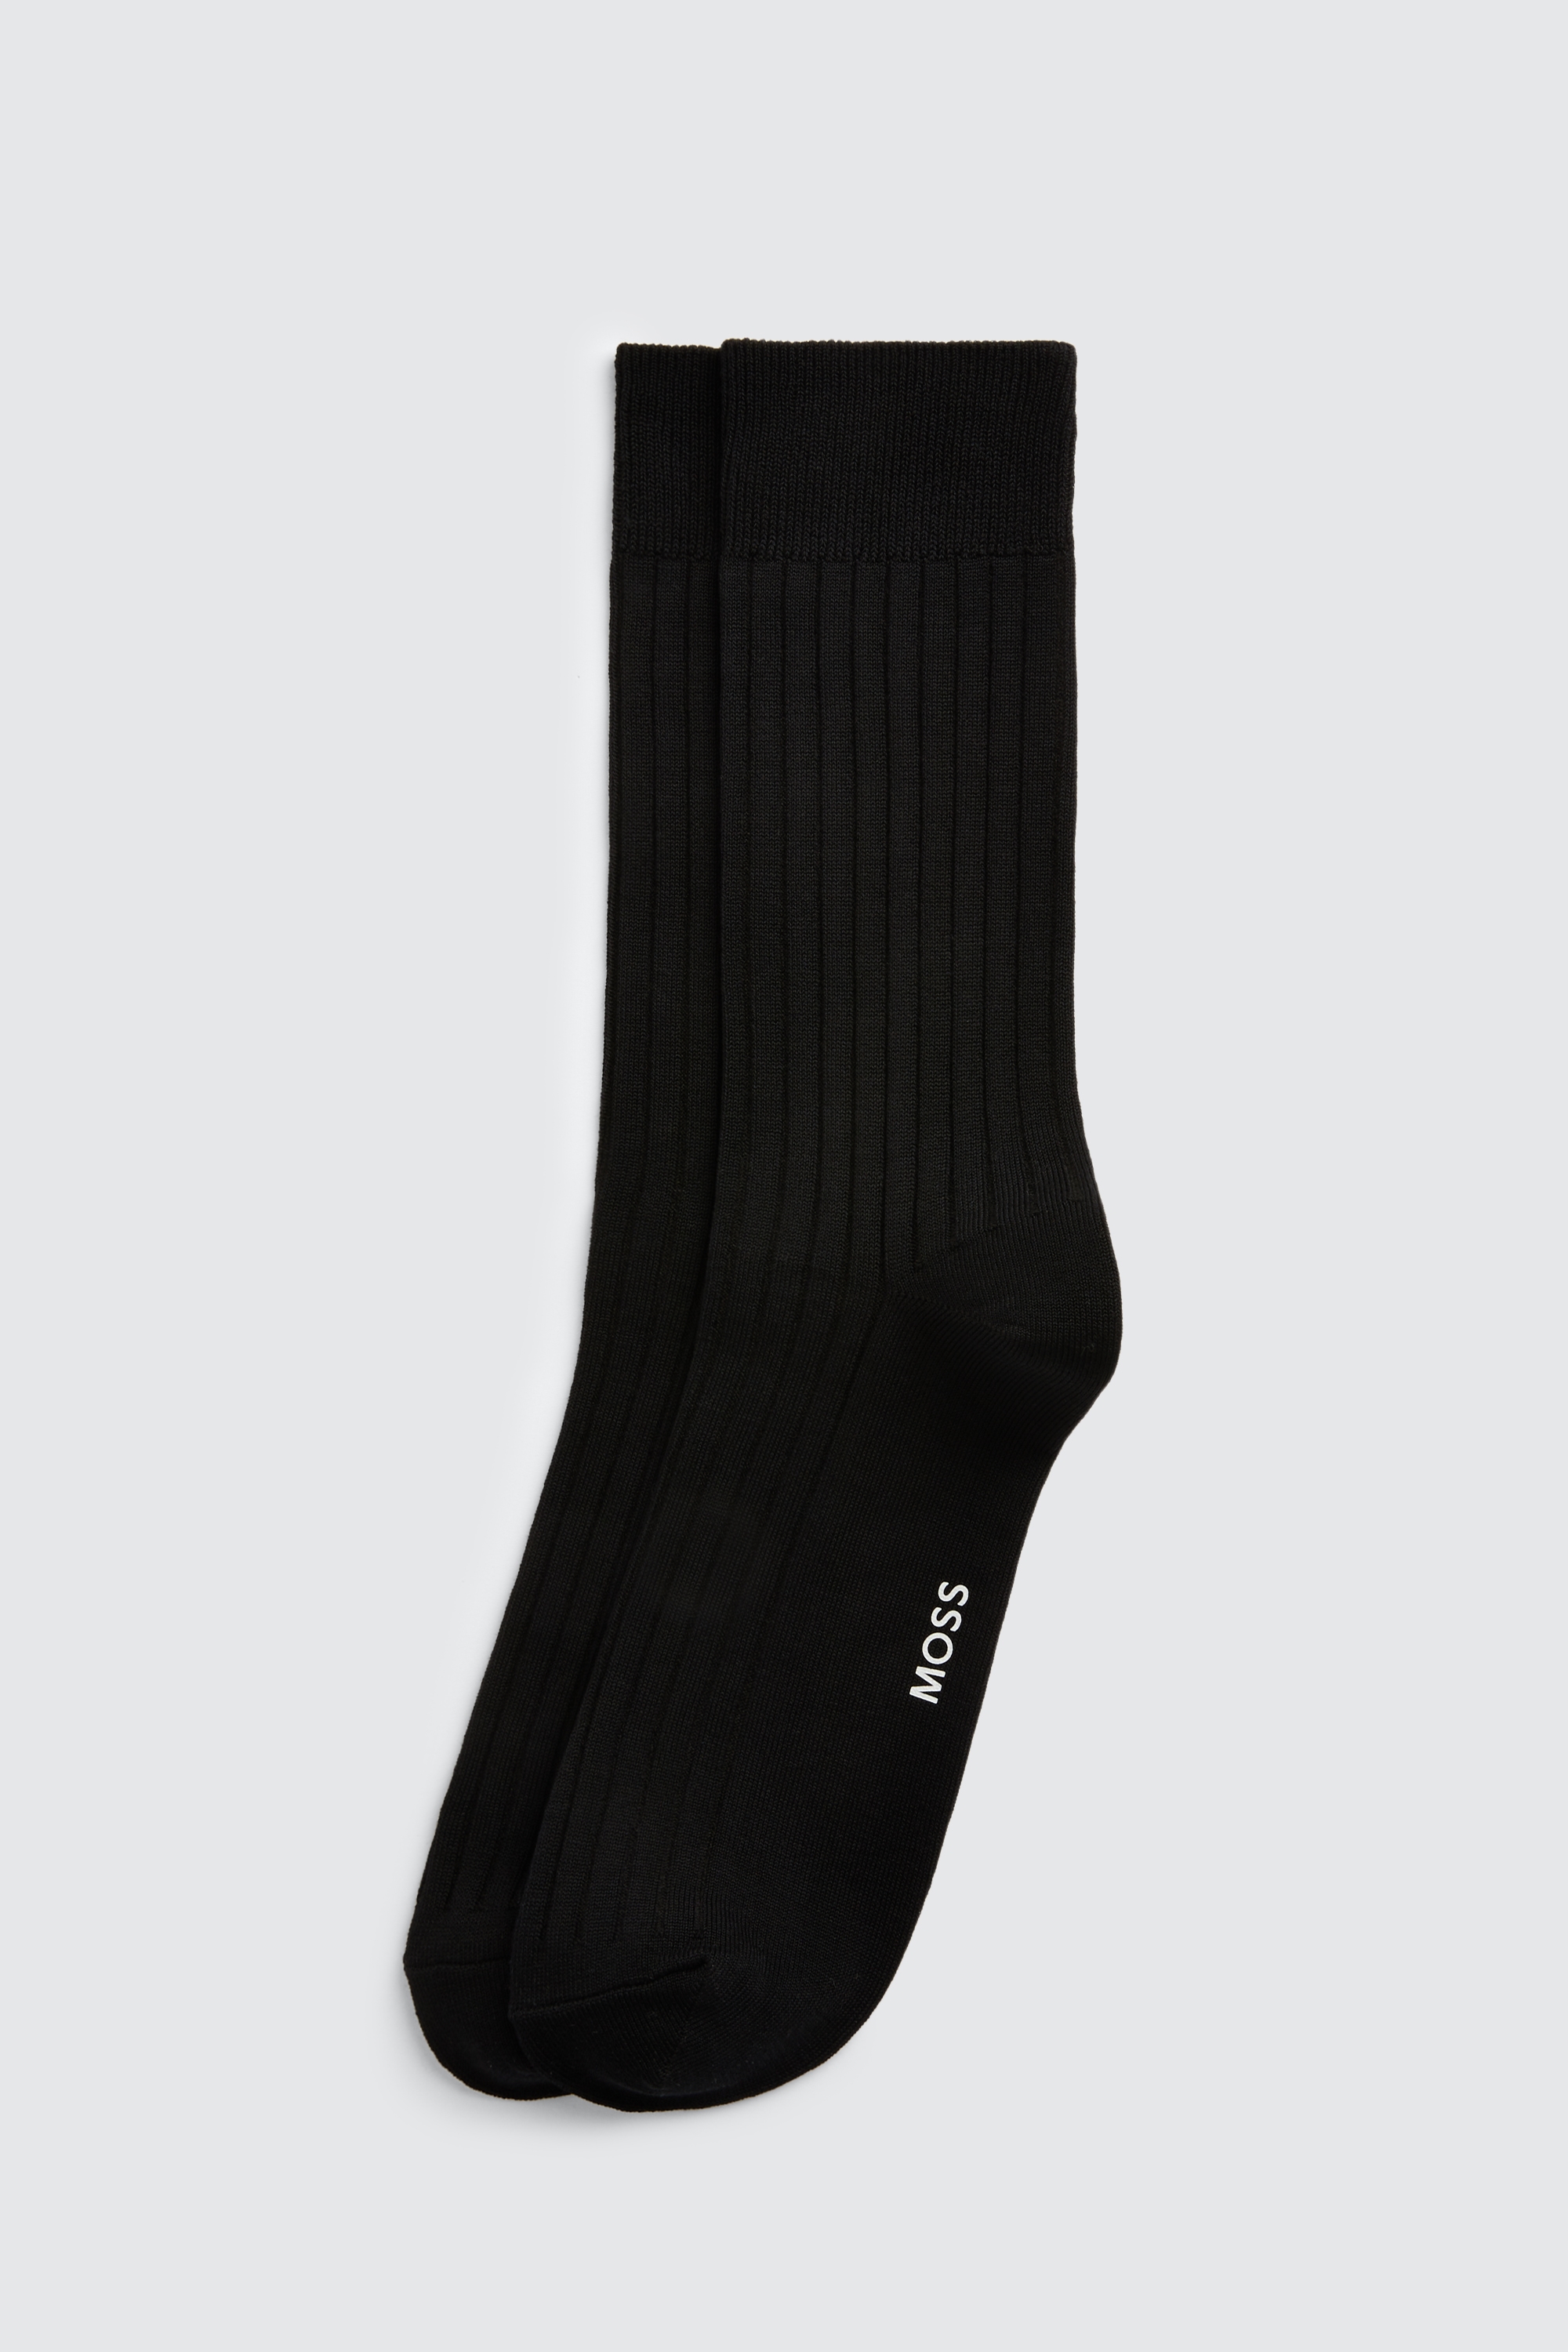 Black Fine Ribbed Socks | Buy Online at Moss